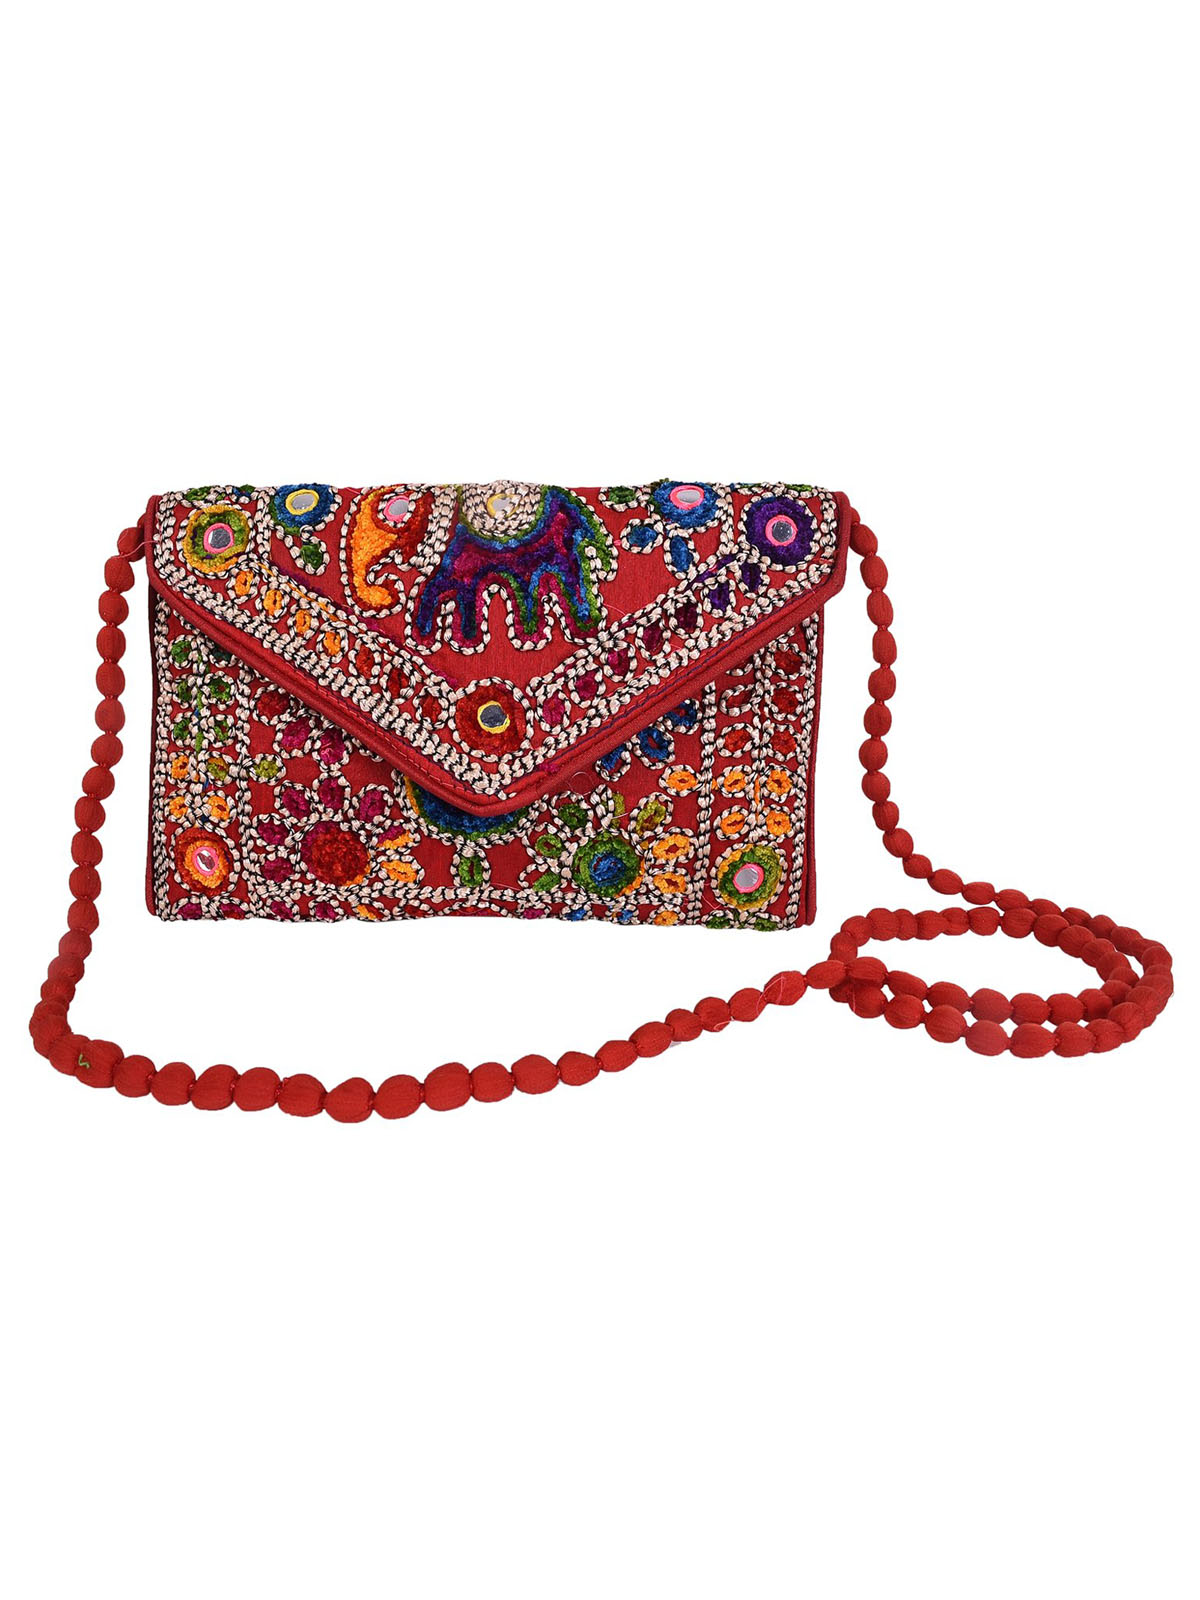 Clutches | Rajasthani Style Hand Bag Singal Pocket | Freeup-bdsngoinhaviet.com.vn